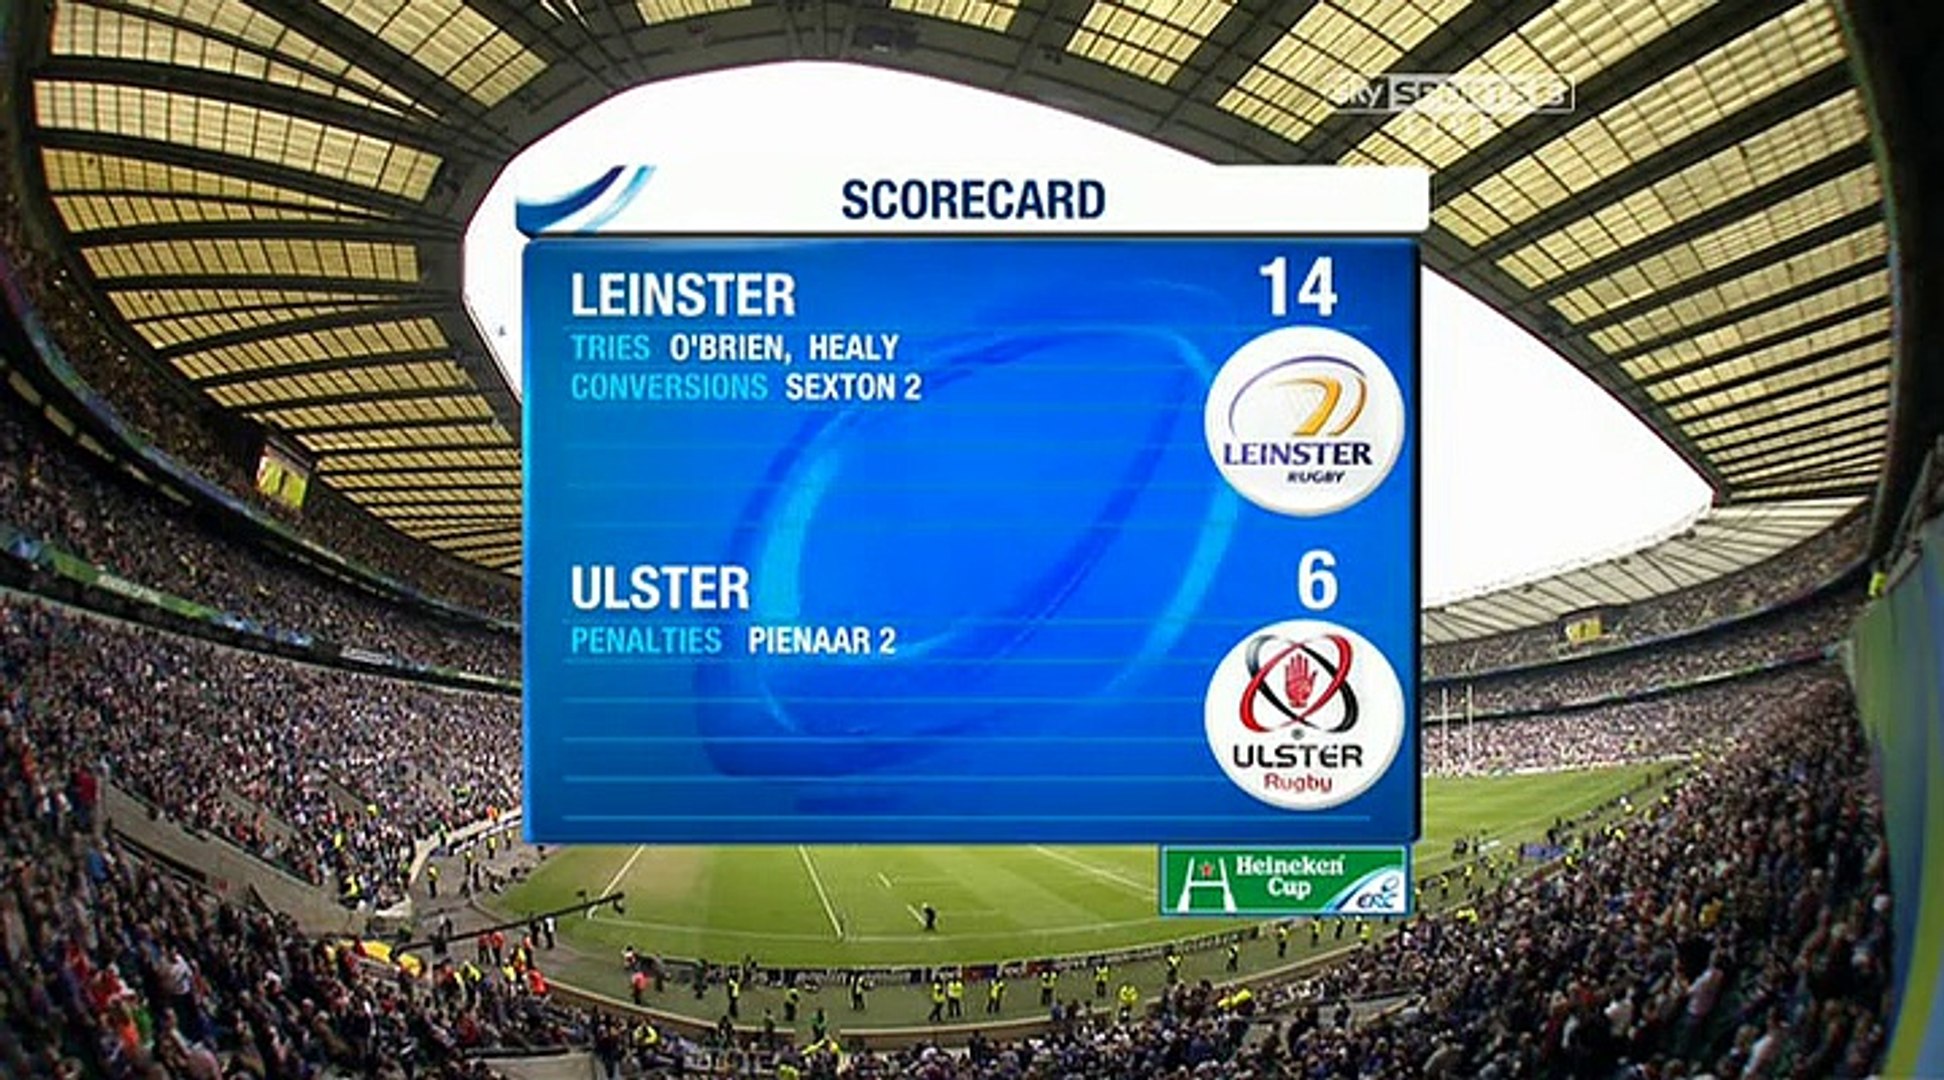 Heineken Cup 2011-12 Final - Leinster vs Ulster - 2nd Half